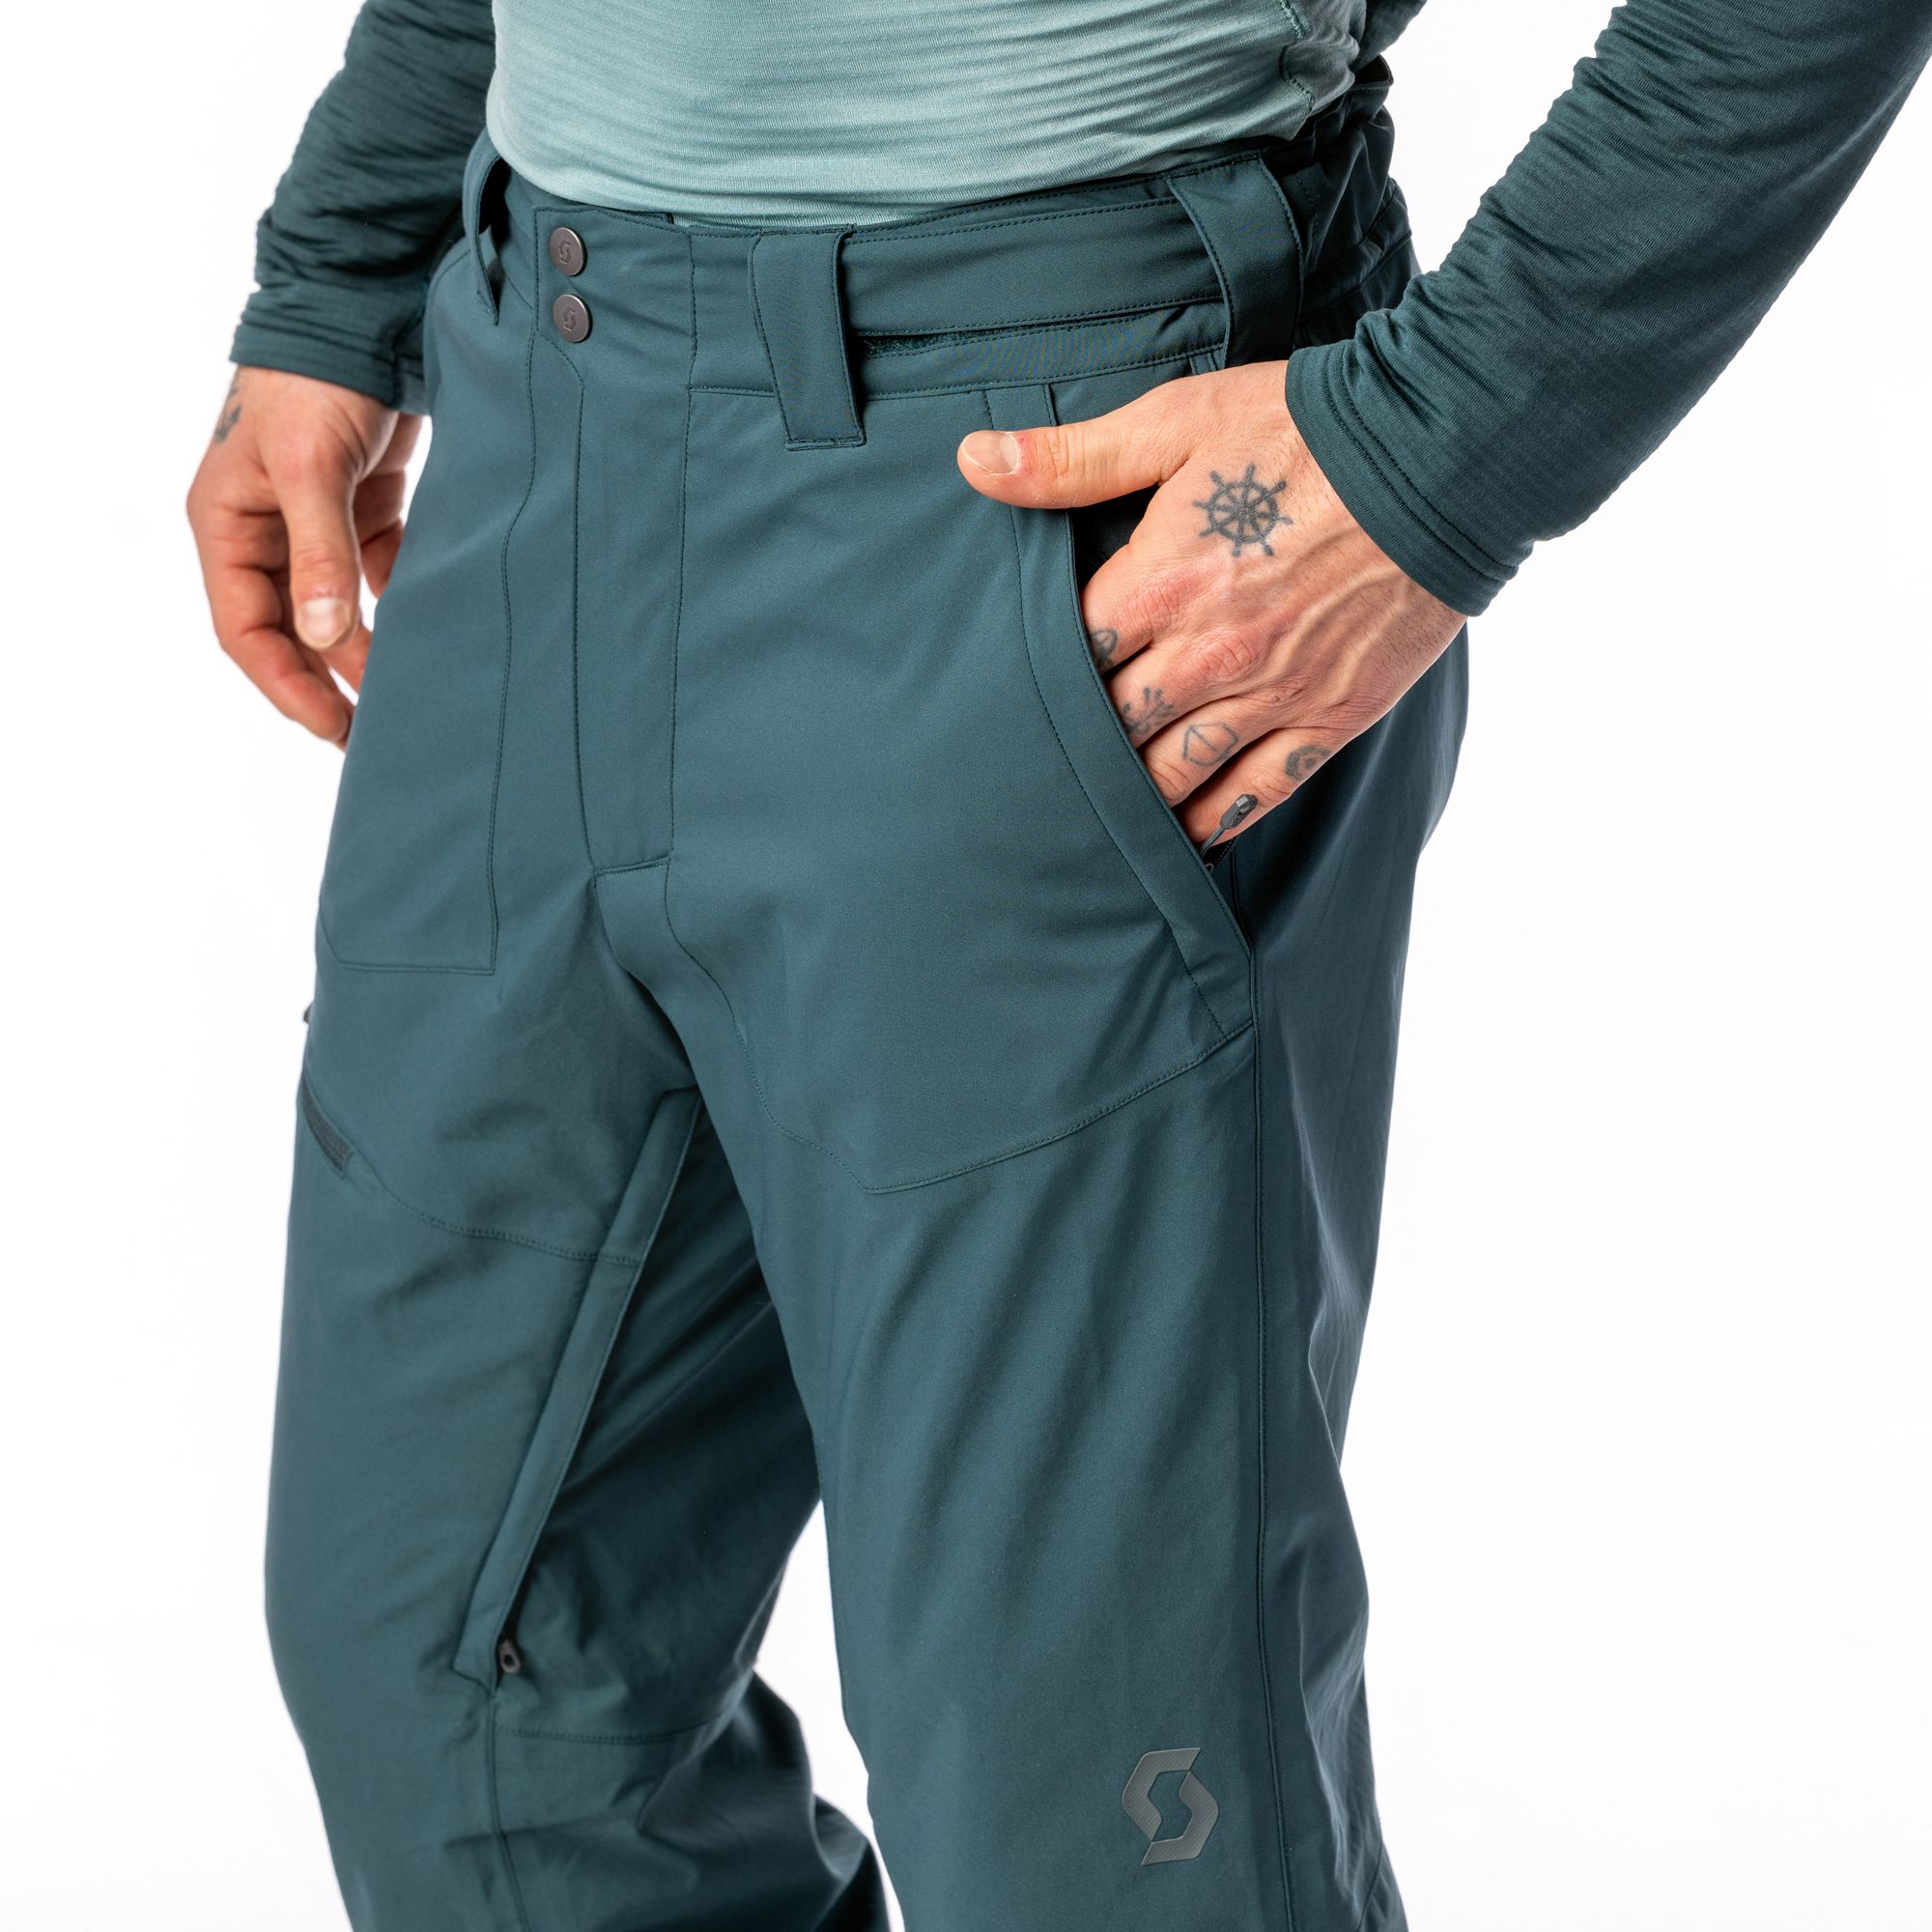 Scott Ultimate Dryo 10 Pant M grey green - Buy Online, 199,95 €